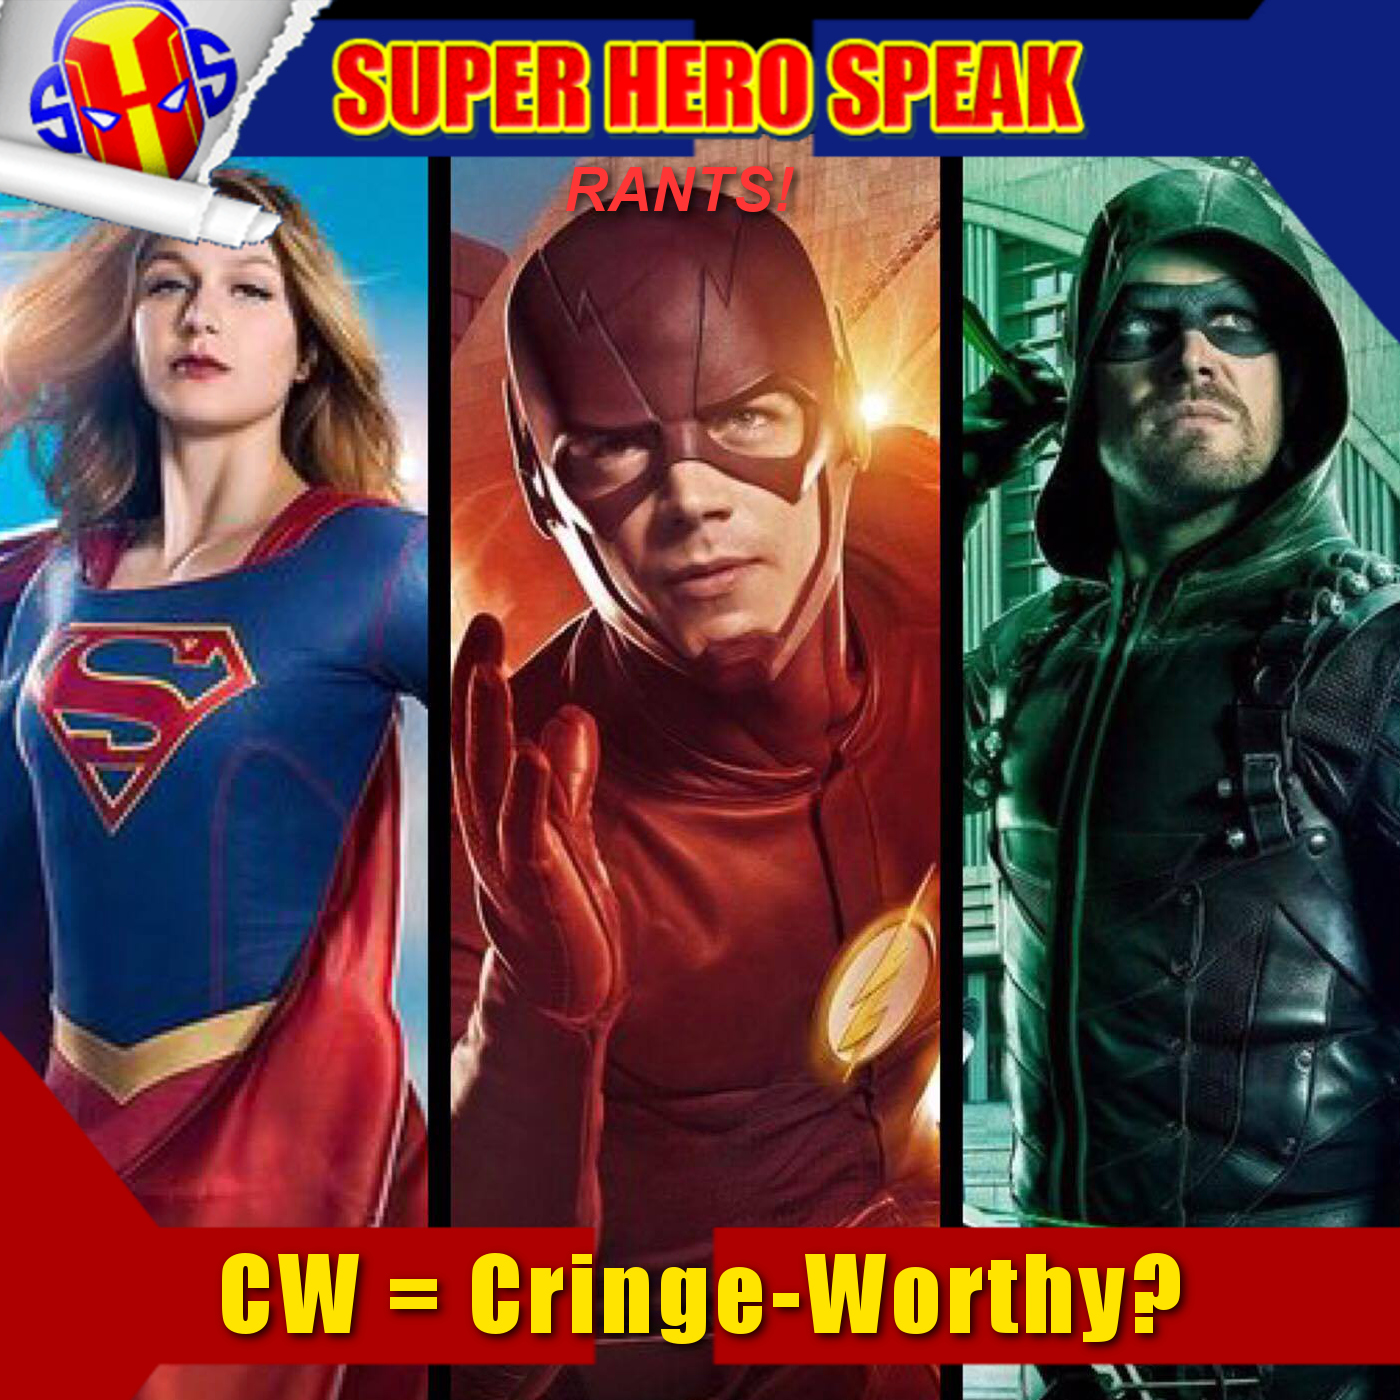 CW = Cringe-Worthy?